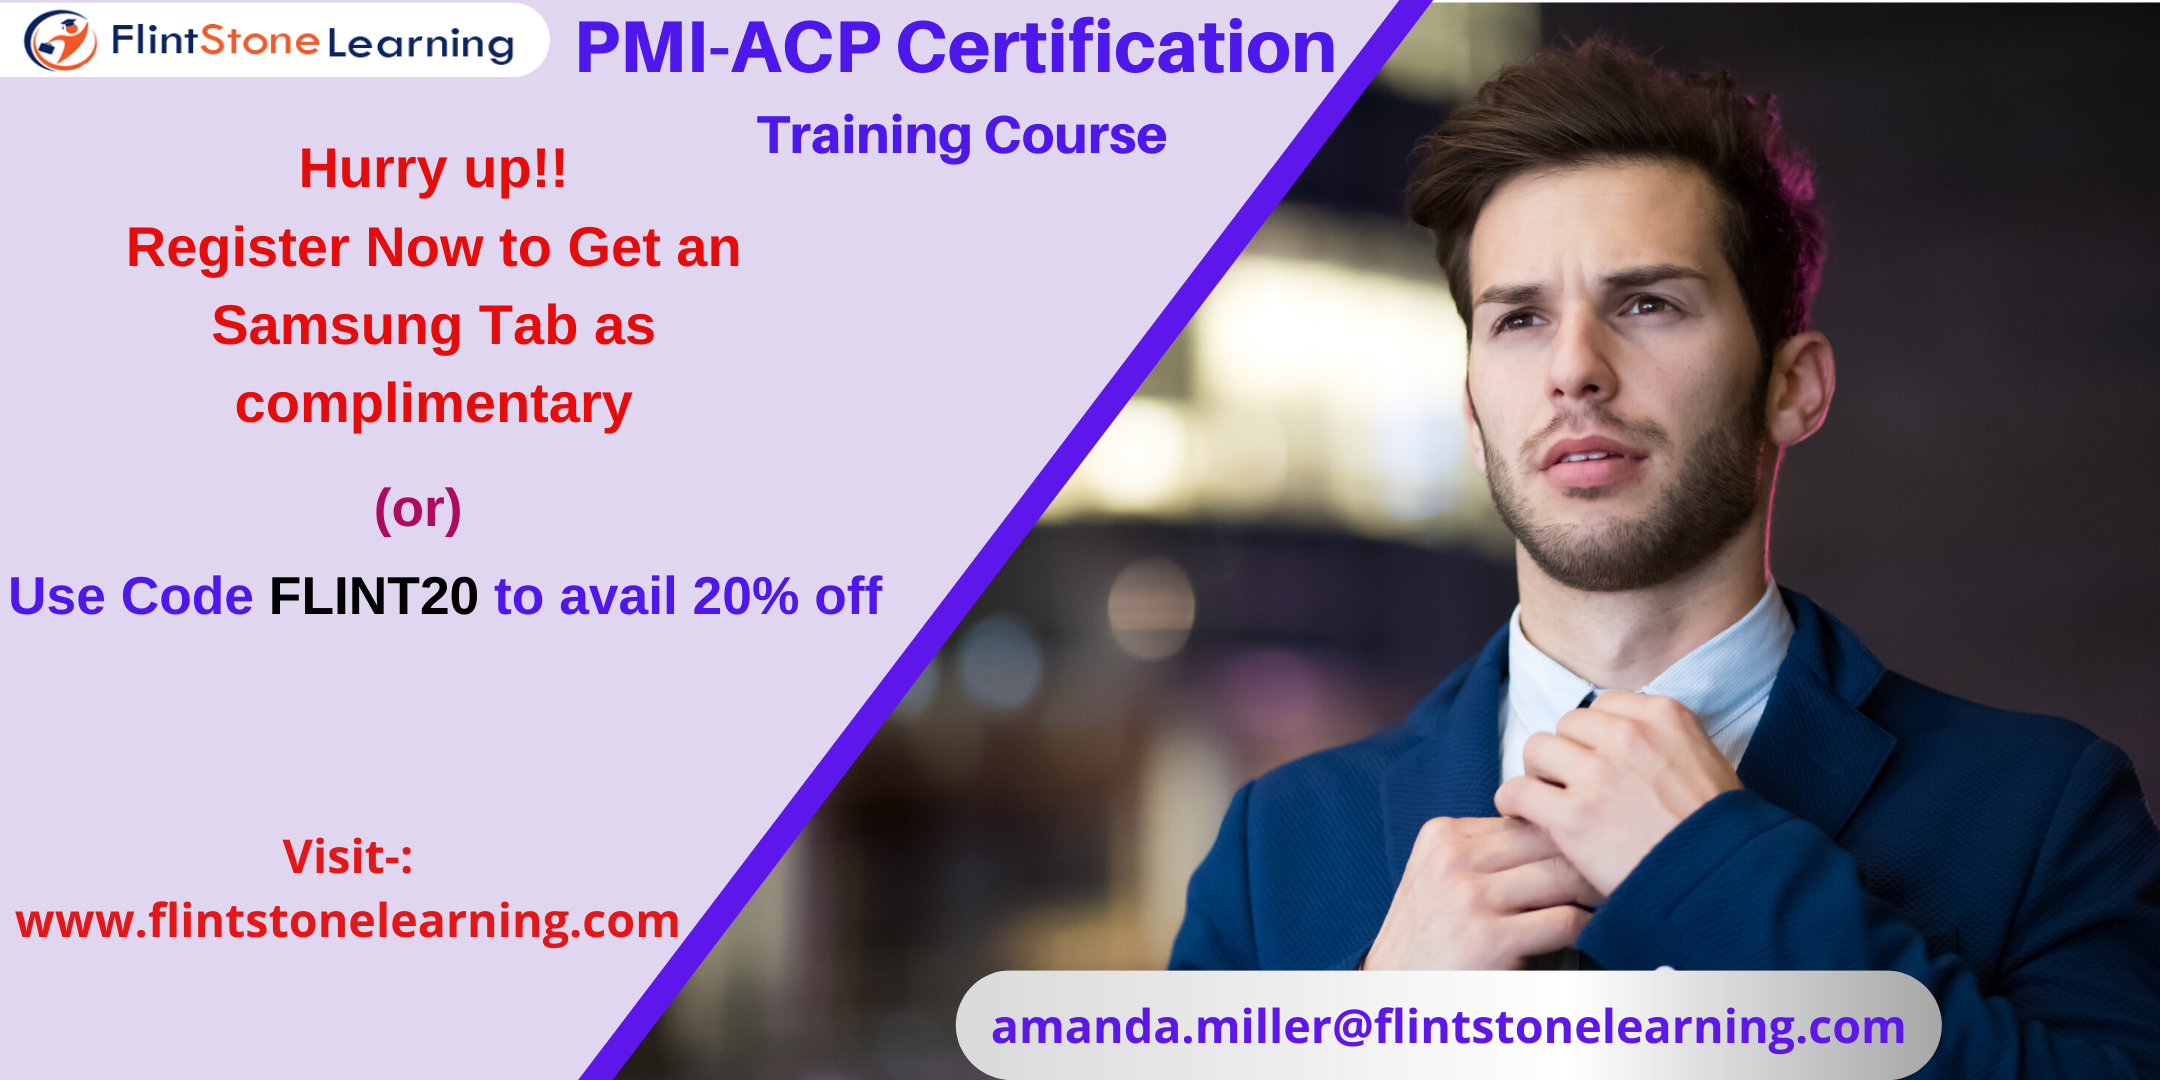 PMI-ACP Certification Training Course in Encino, CA